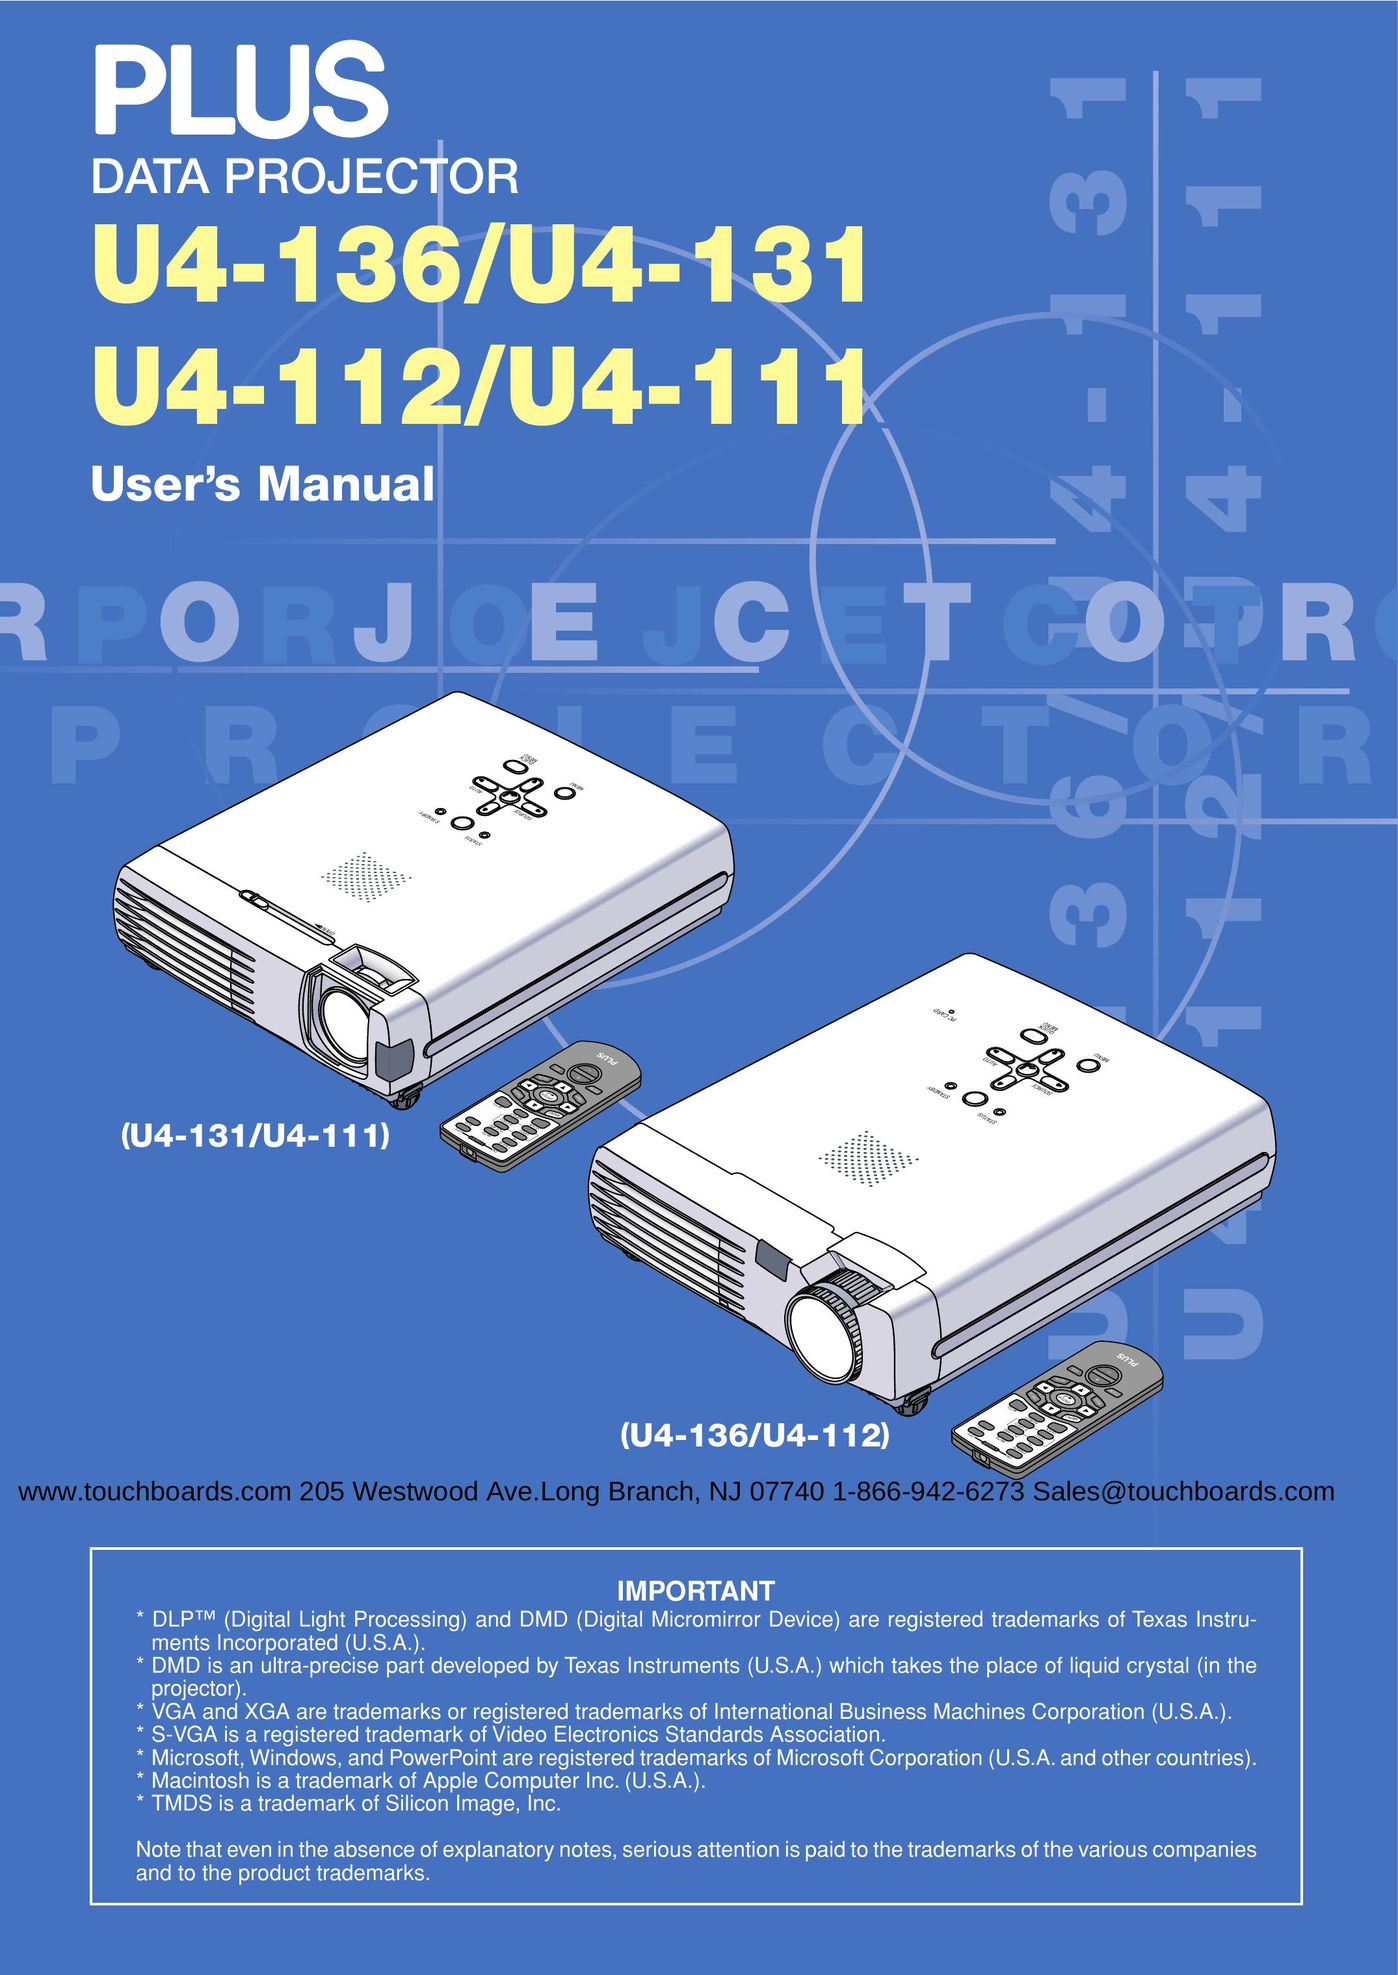 PLUS Vision U4-111 Projector User Manual